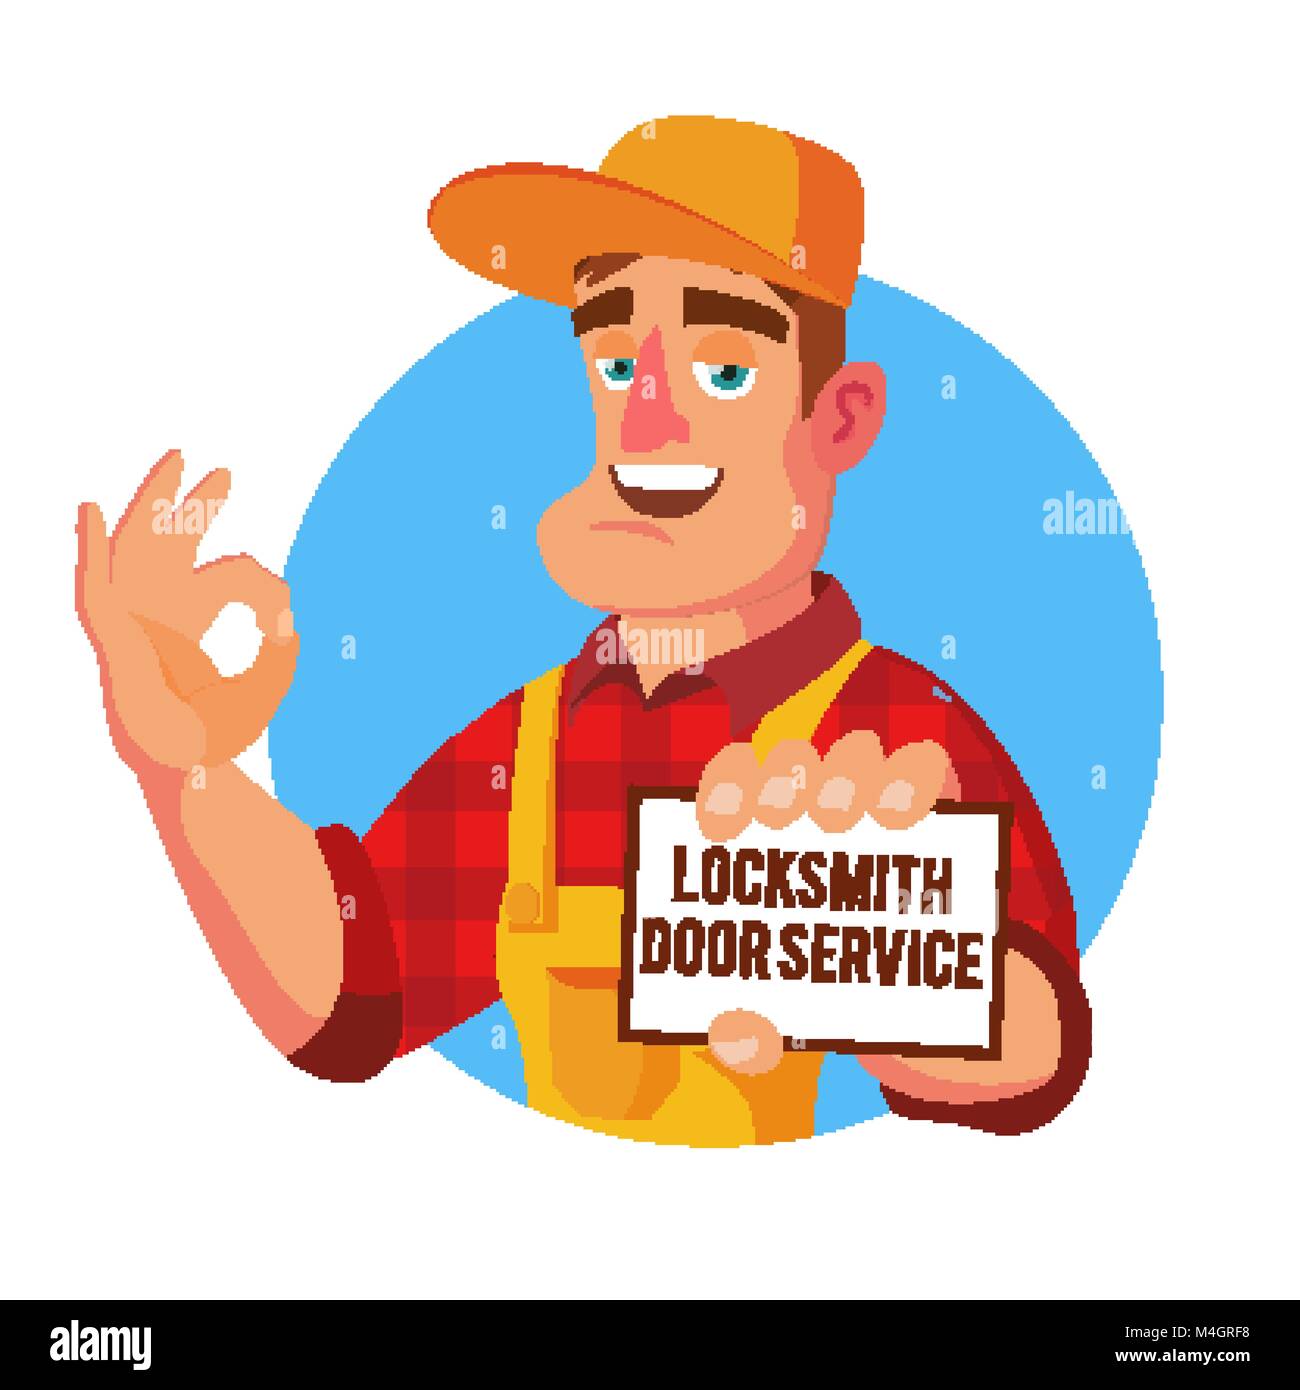 Locksmith Door Service Vector. Professional Master Repairman. Isolated Flat Cartoon Character Illustration Stock Vector